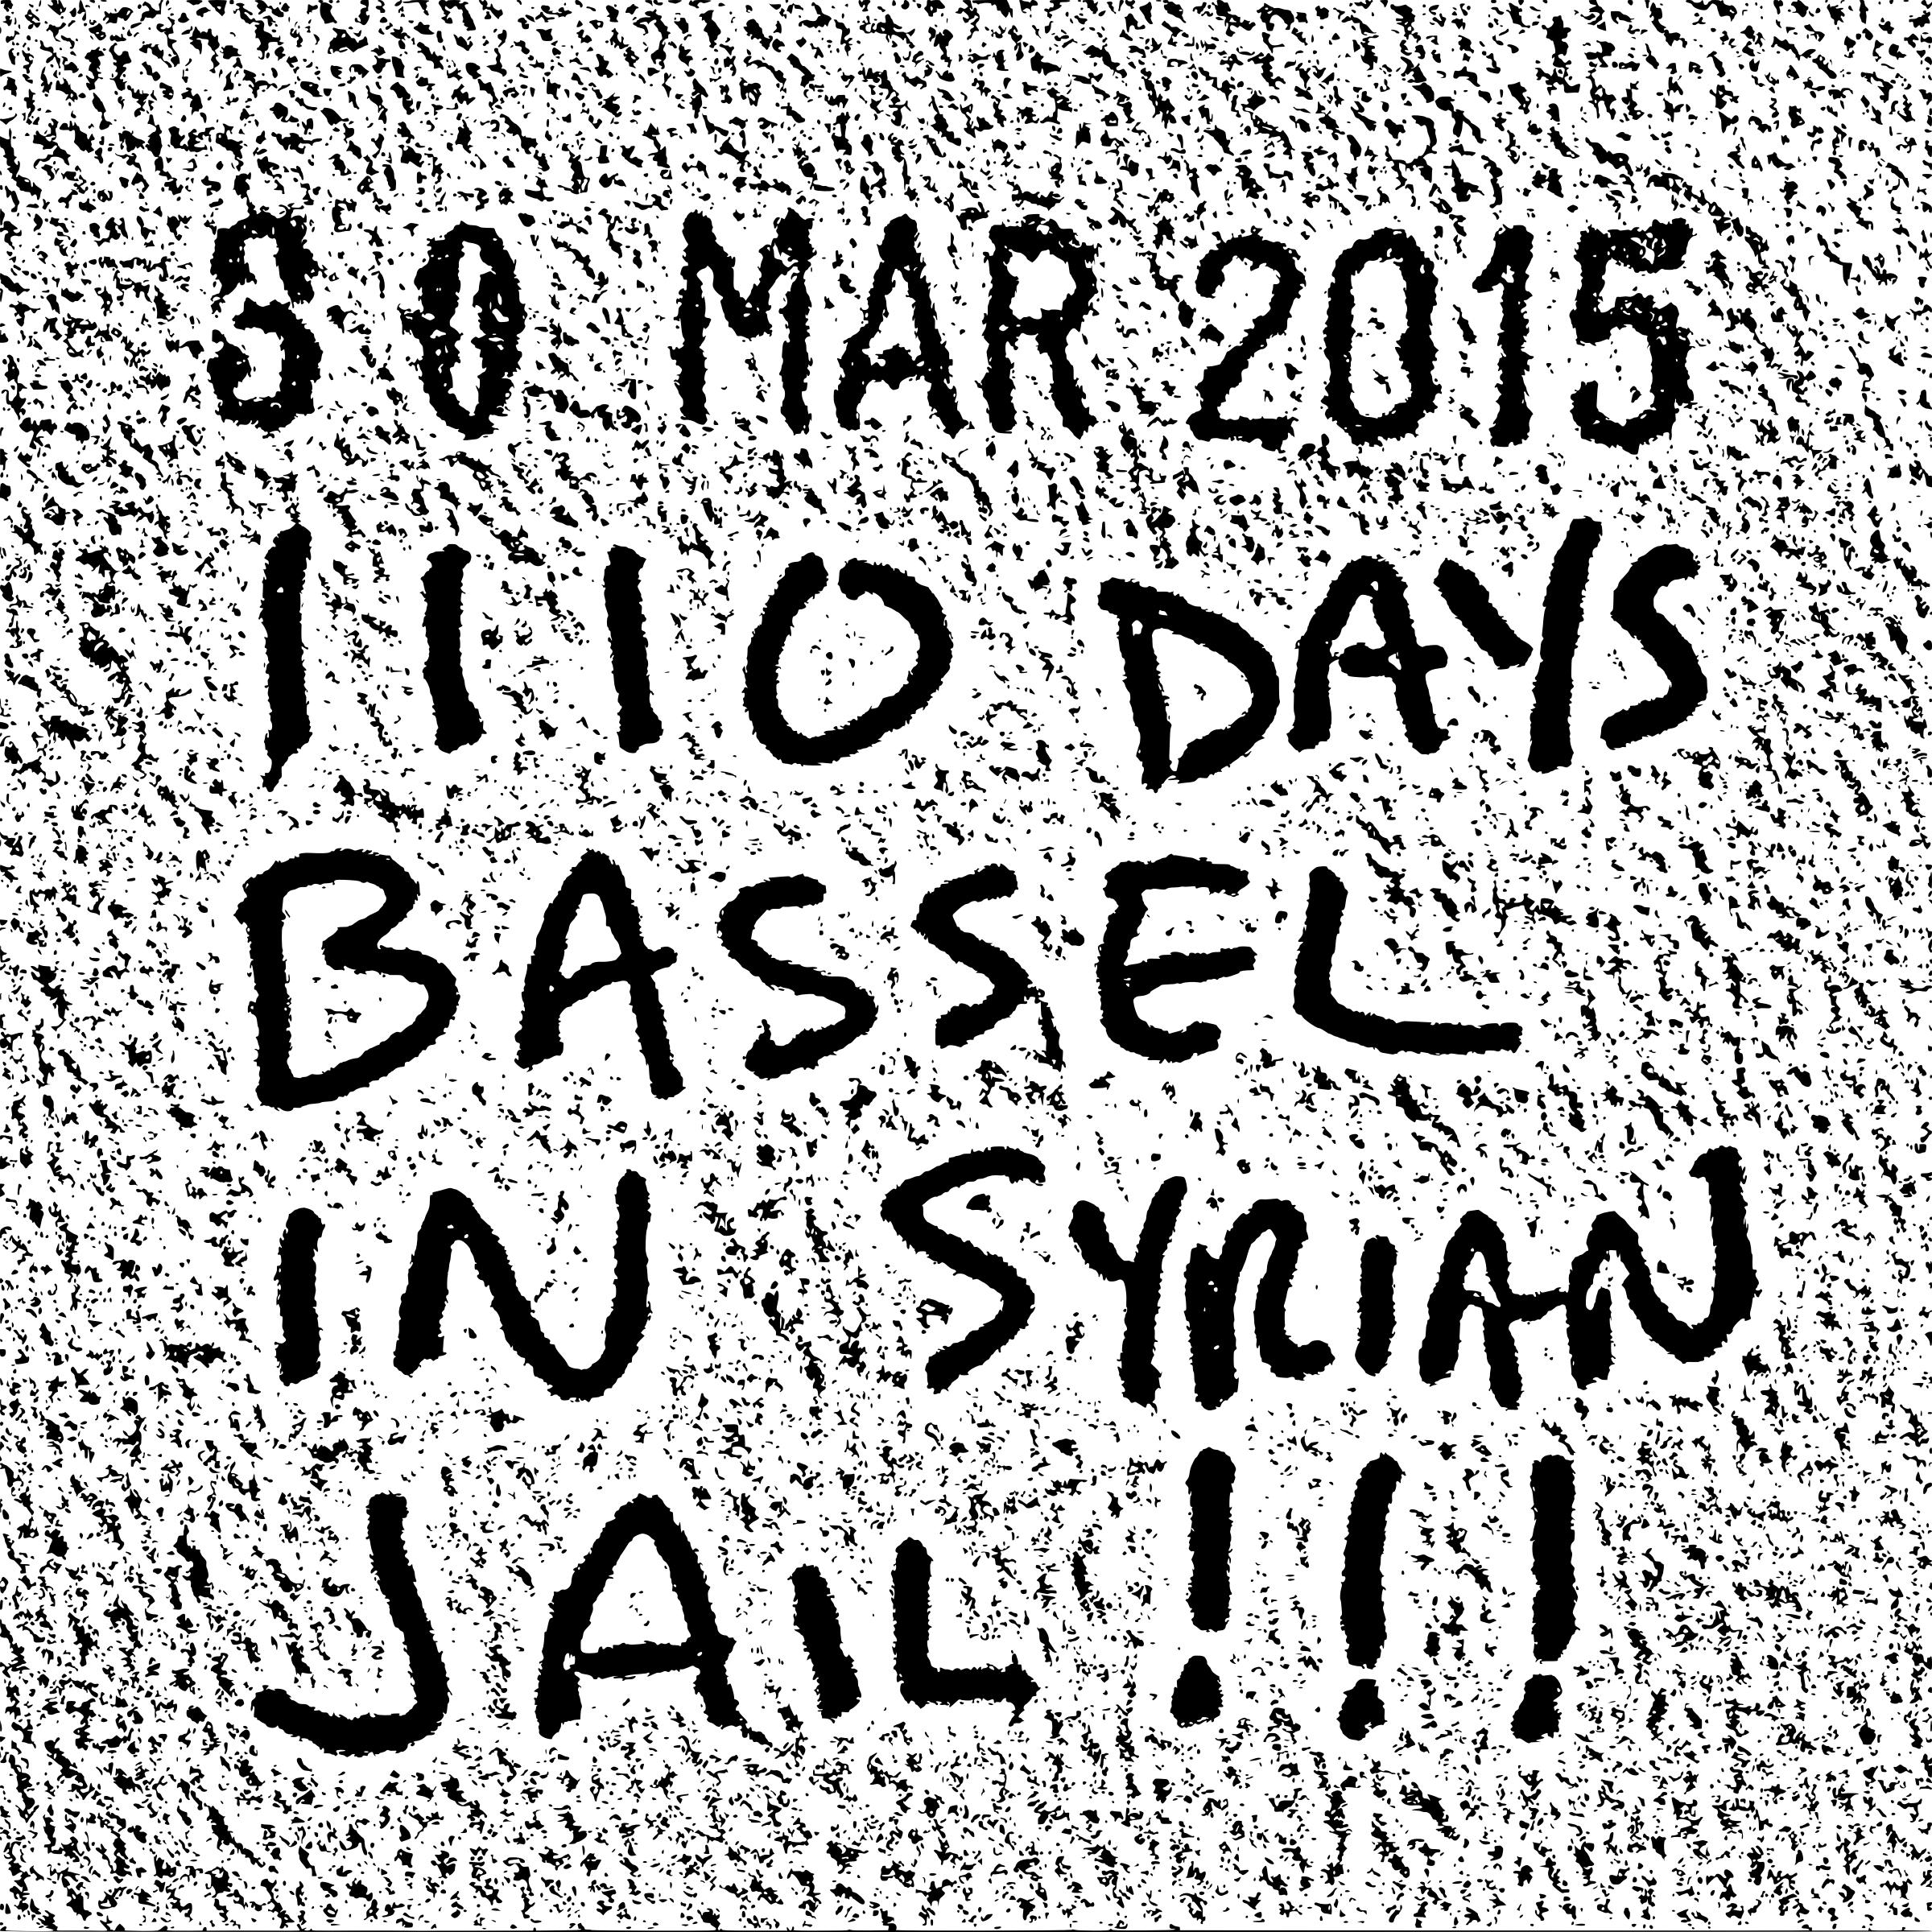 Freebassel Day 1110 icons